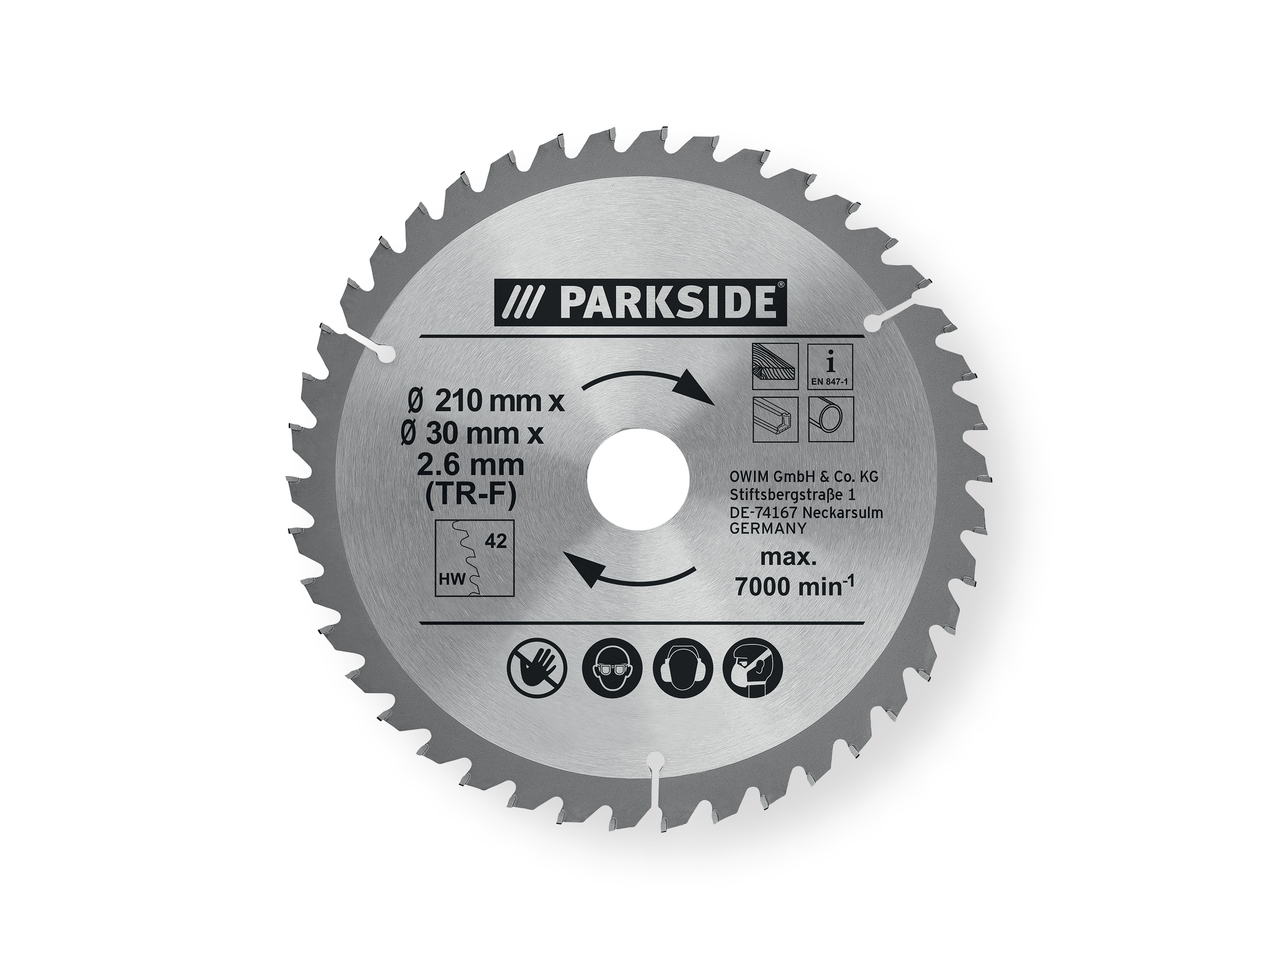 'Parkside(R)' Hoja de sierra circular 210 mm